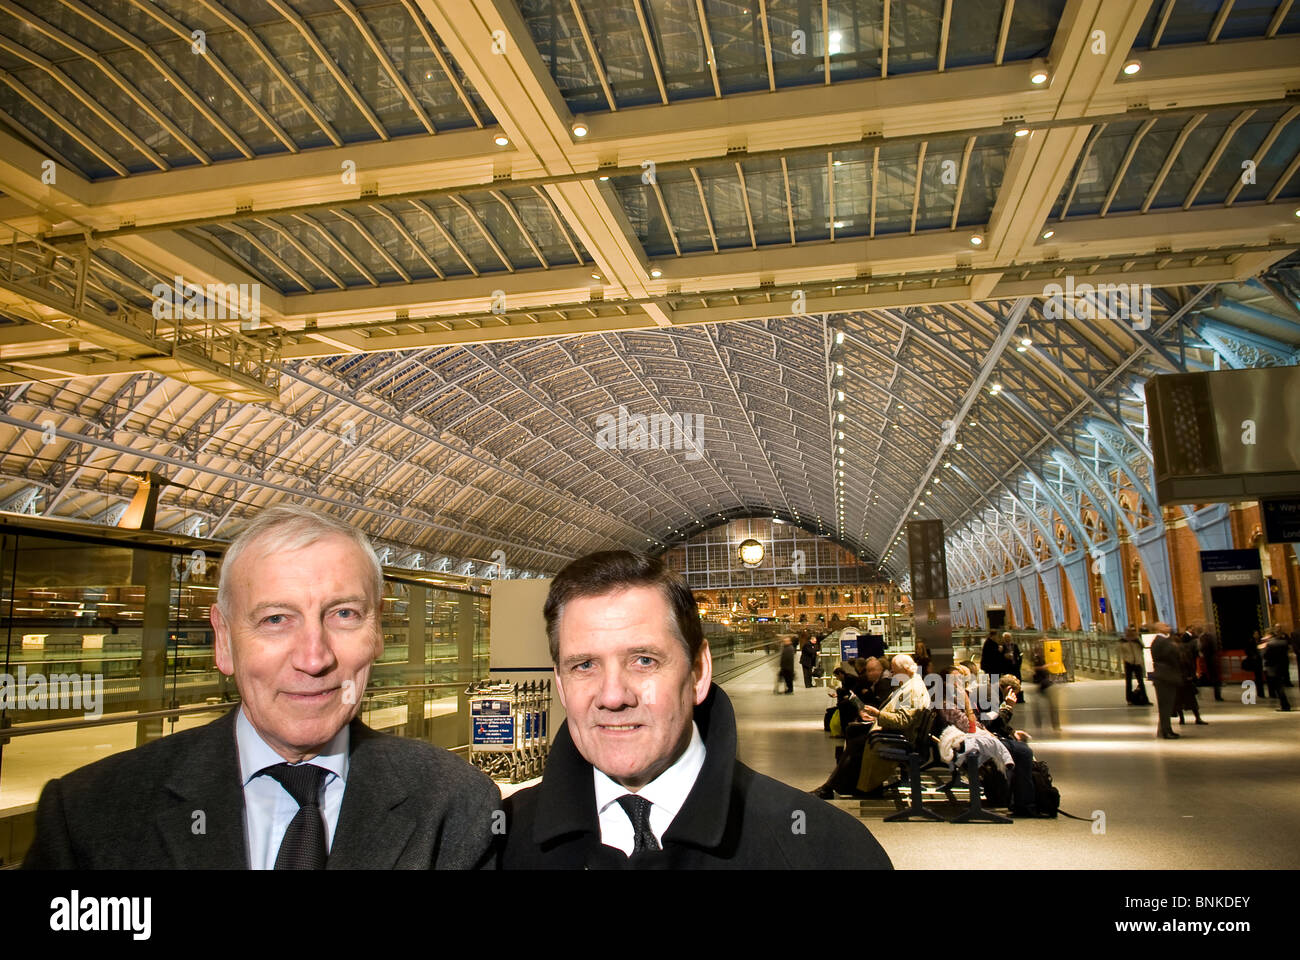 Engineer Mike Glover and Architect Alastair Lansley in Saint Pancras International Railway Terminal, Kings Cross, London, UK Stock Photo